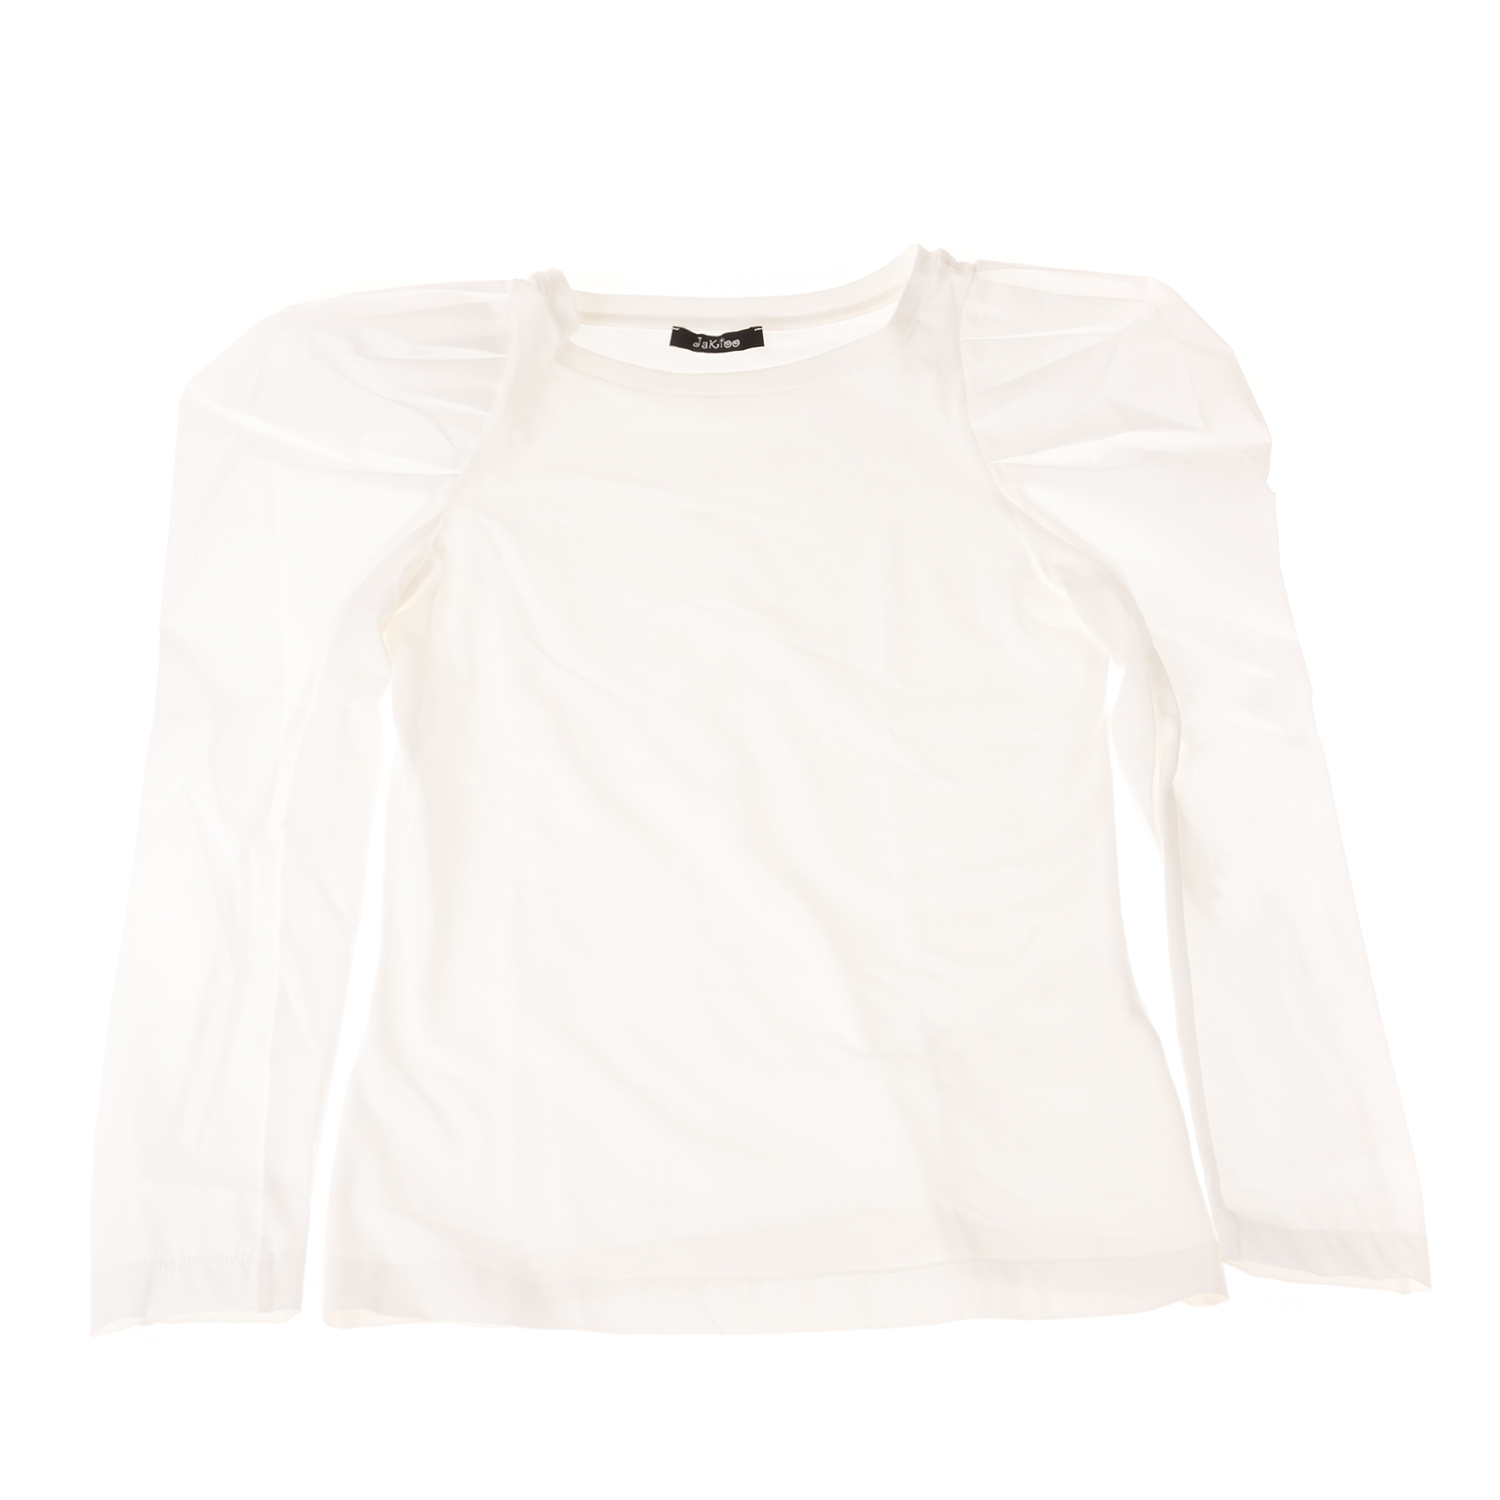 JAKIOO Παιδική μπλούζα JAKIOO T-SHIRT MANICA PIEGOLINE λευκή